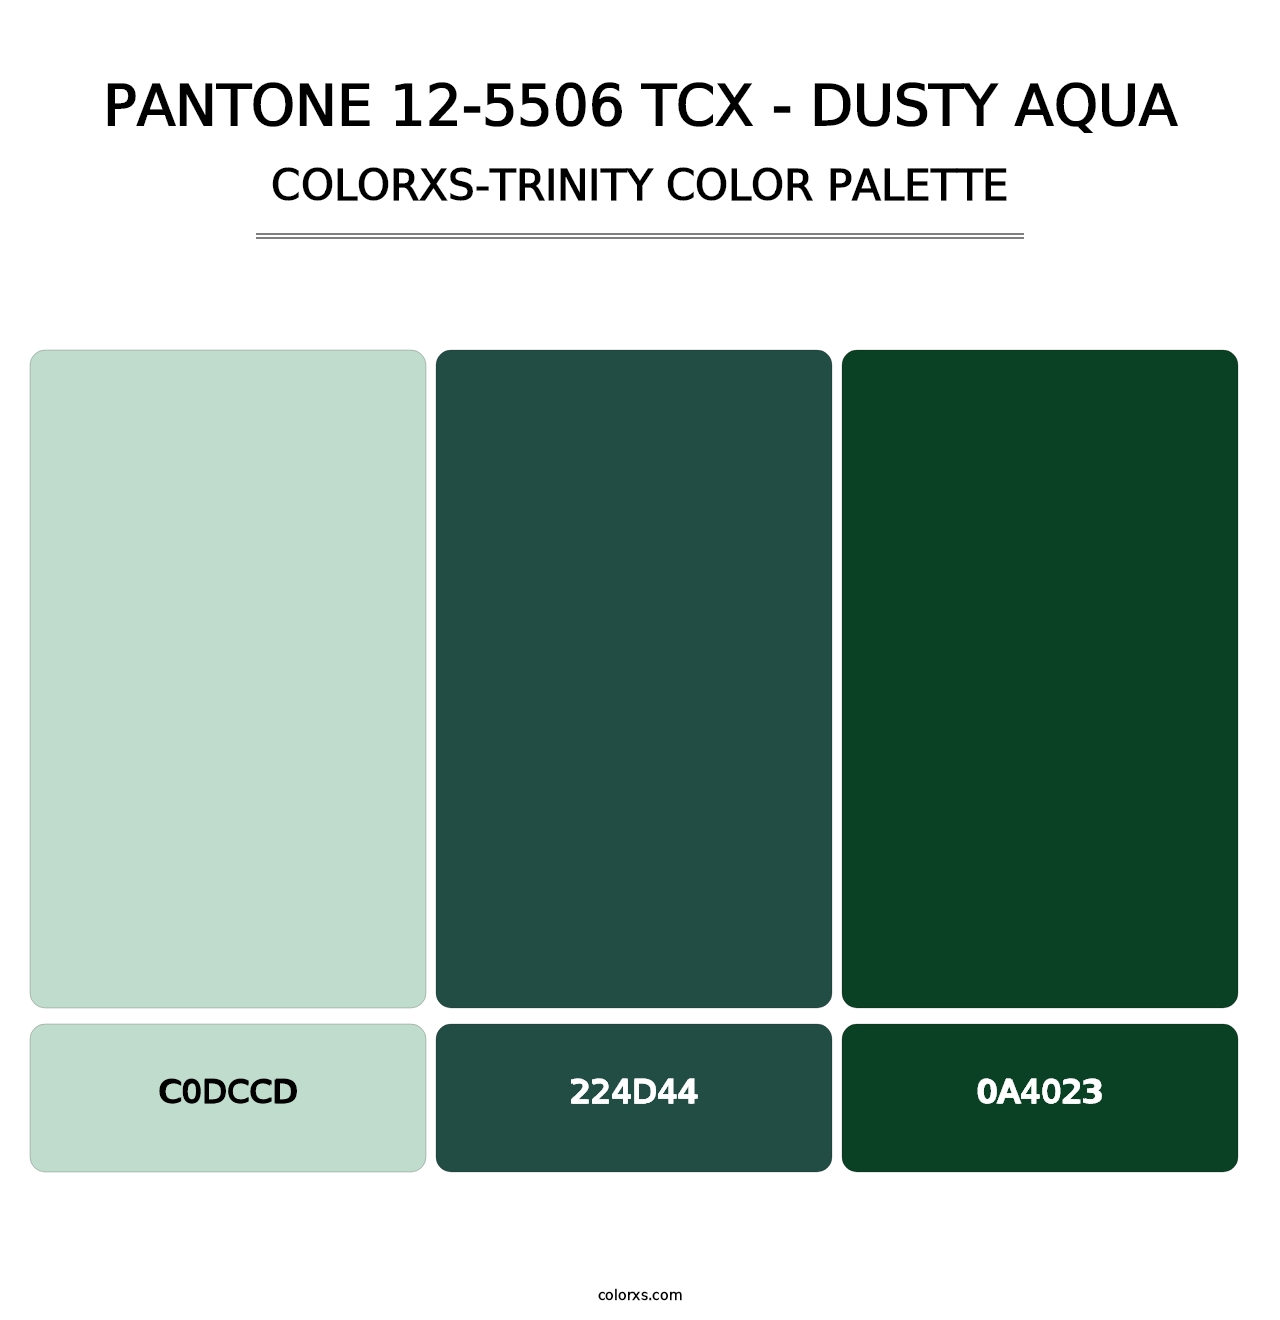 PANTONE 12-5506 TCX - Dusty Aqua - Colorxs Trinity Palette